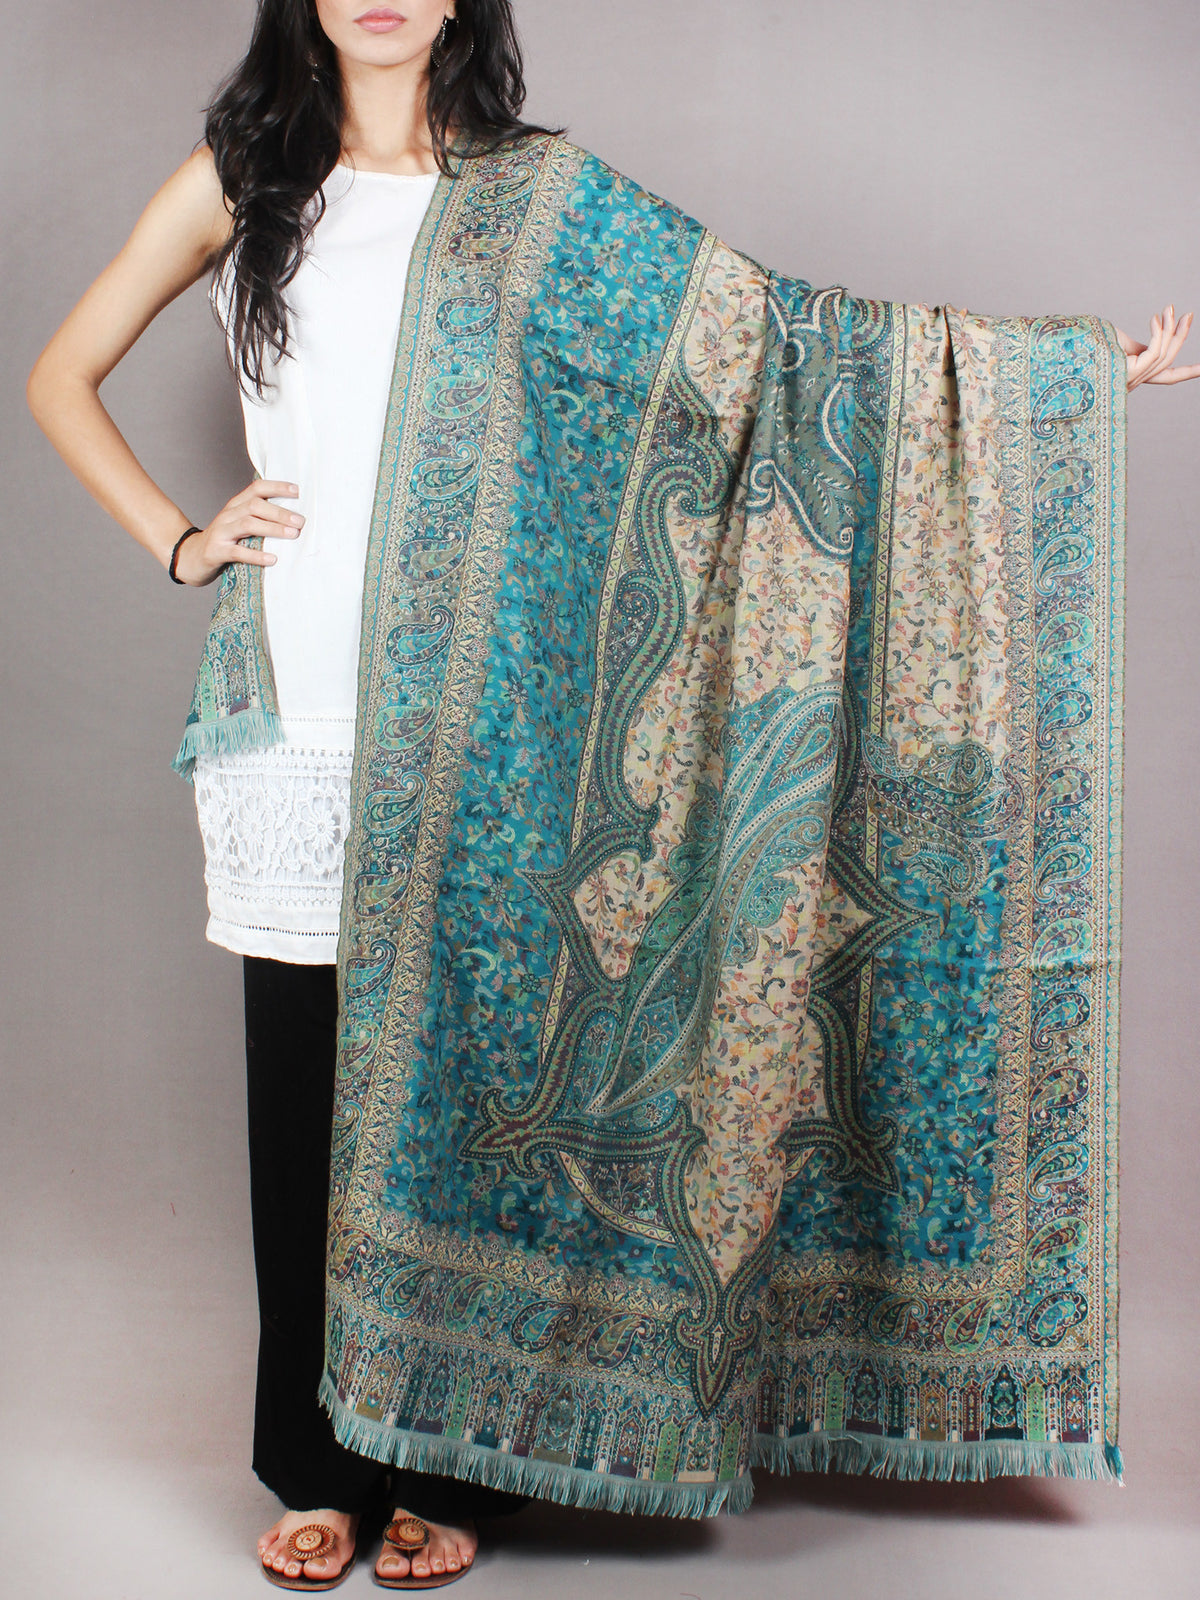 Beige Sky Blue Pure Wool Kani Jamawar Cashmere Shawl From Kashmir - S200102